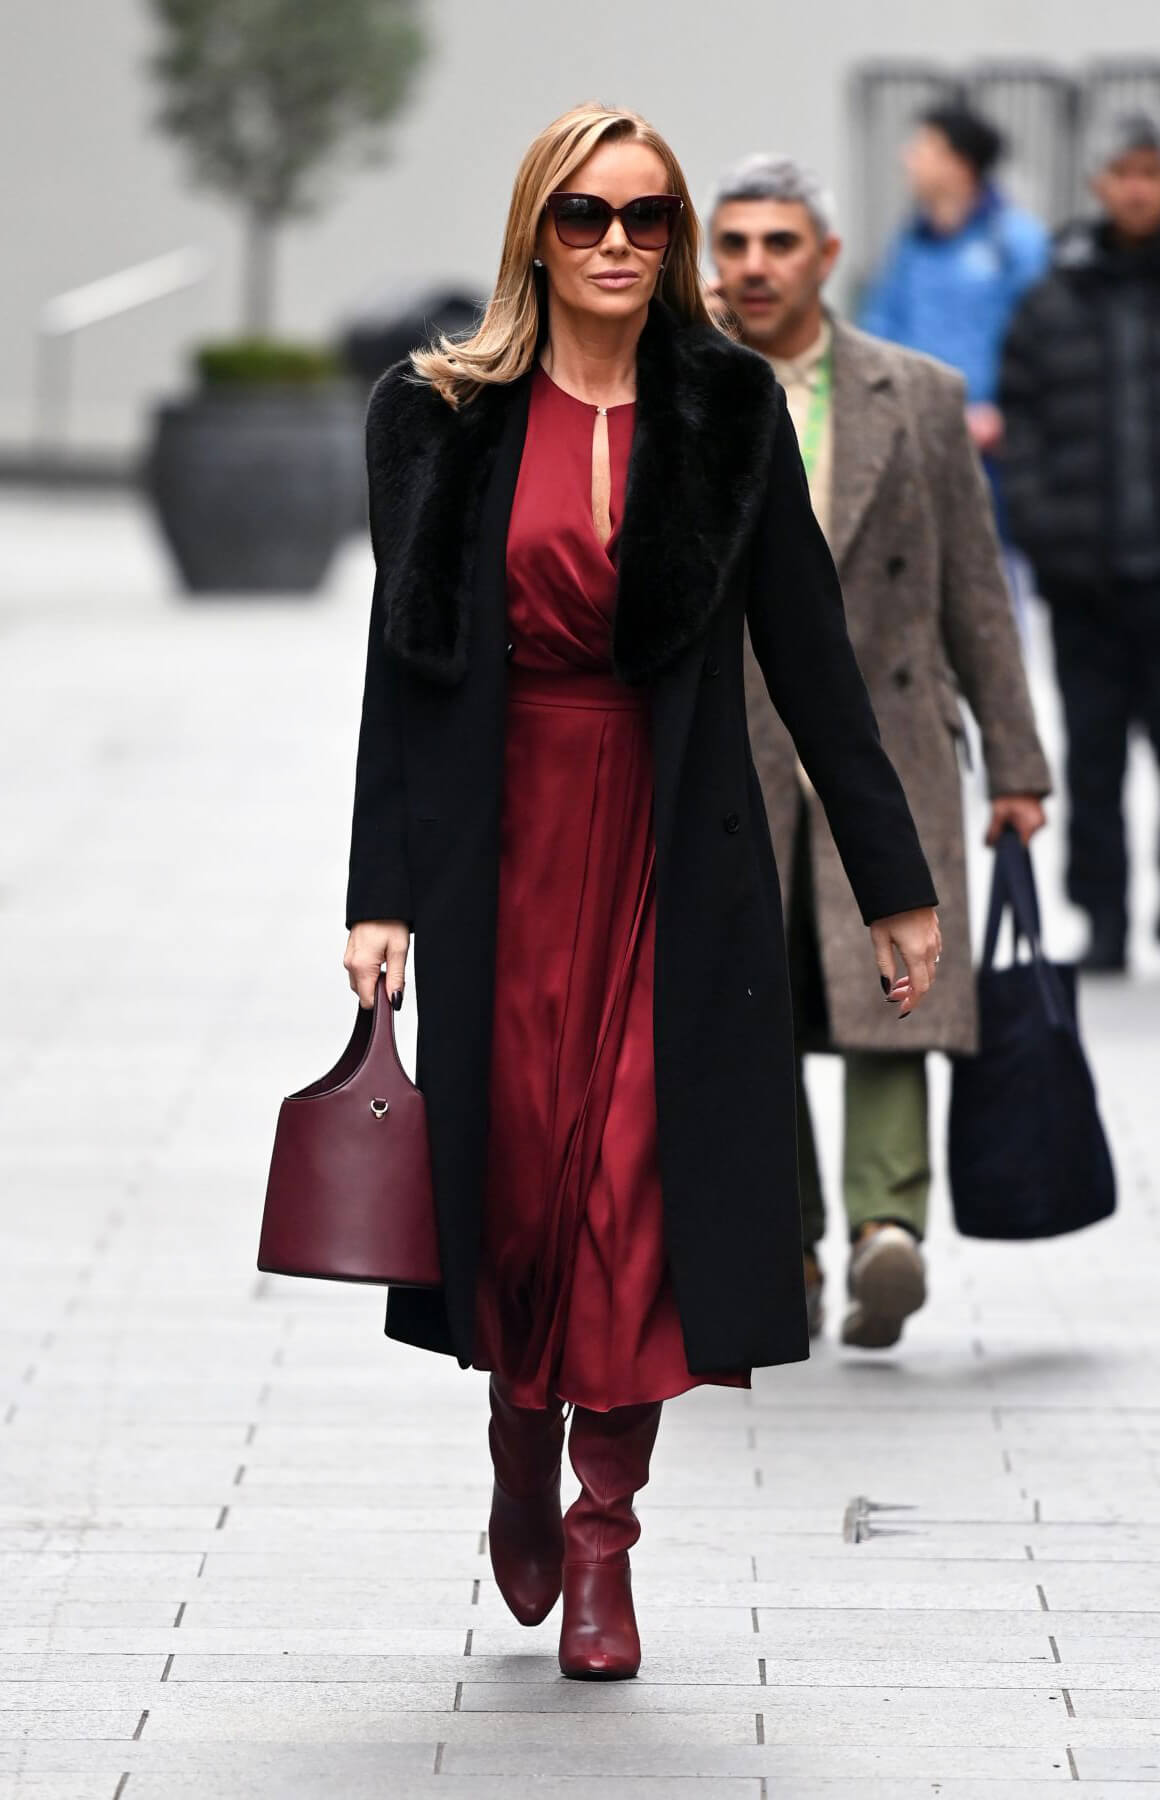 Amanda Holden in Maroon Satin Dress Leaves Global Studios in London 12/02/2020